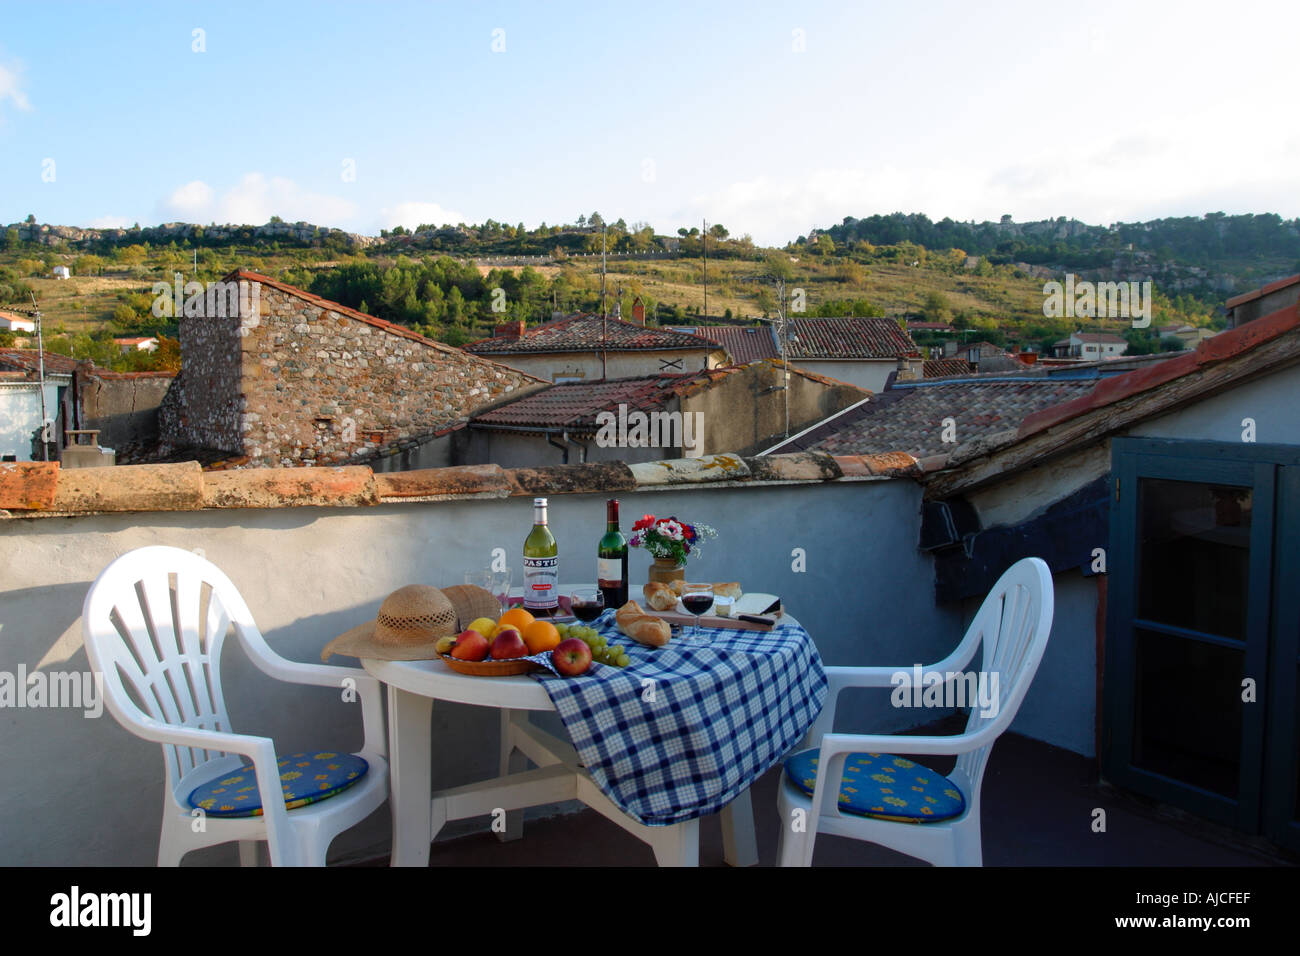 Una comida sentado en la terraza del tejado, Languedoc-Roussillon, Francia Foto de stock